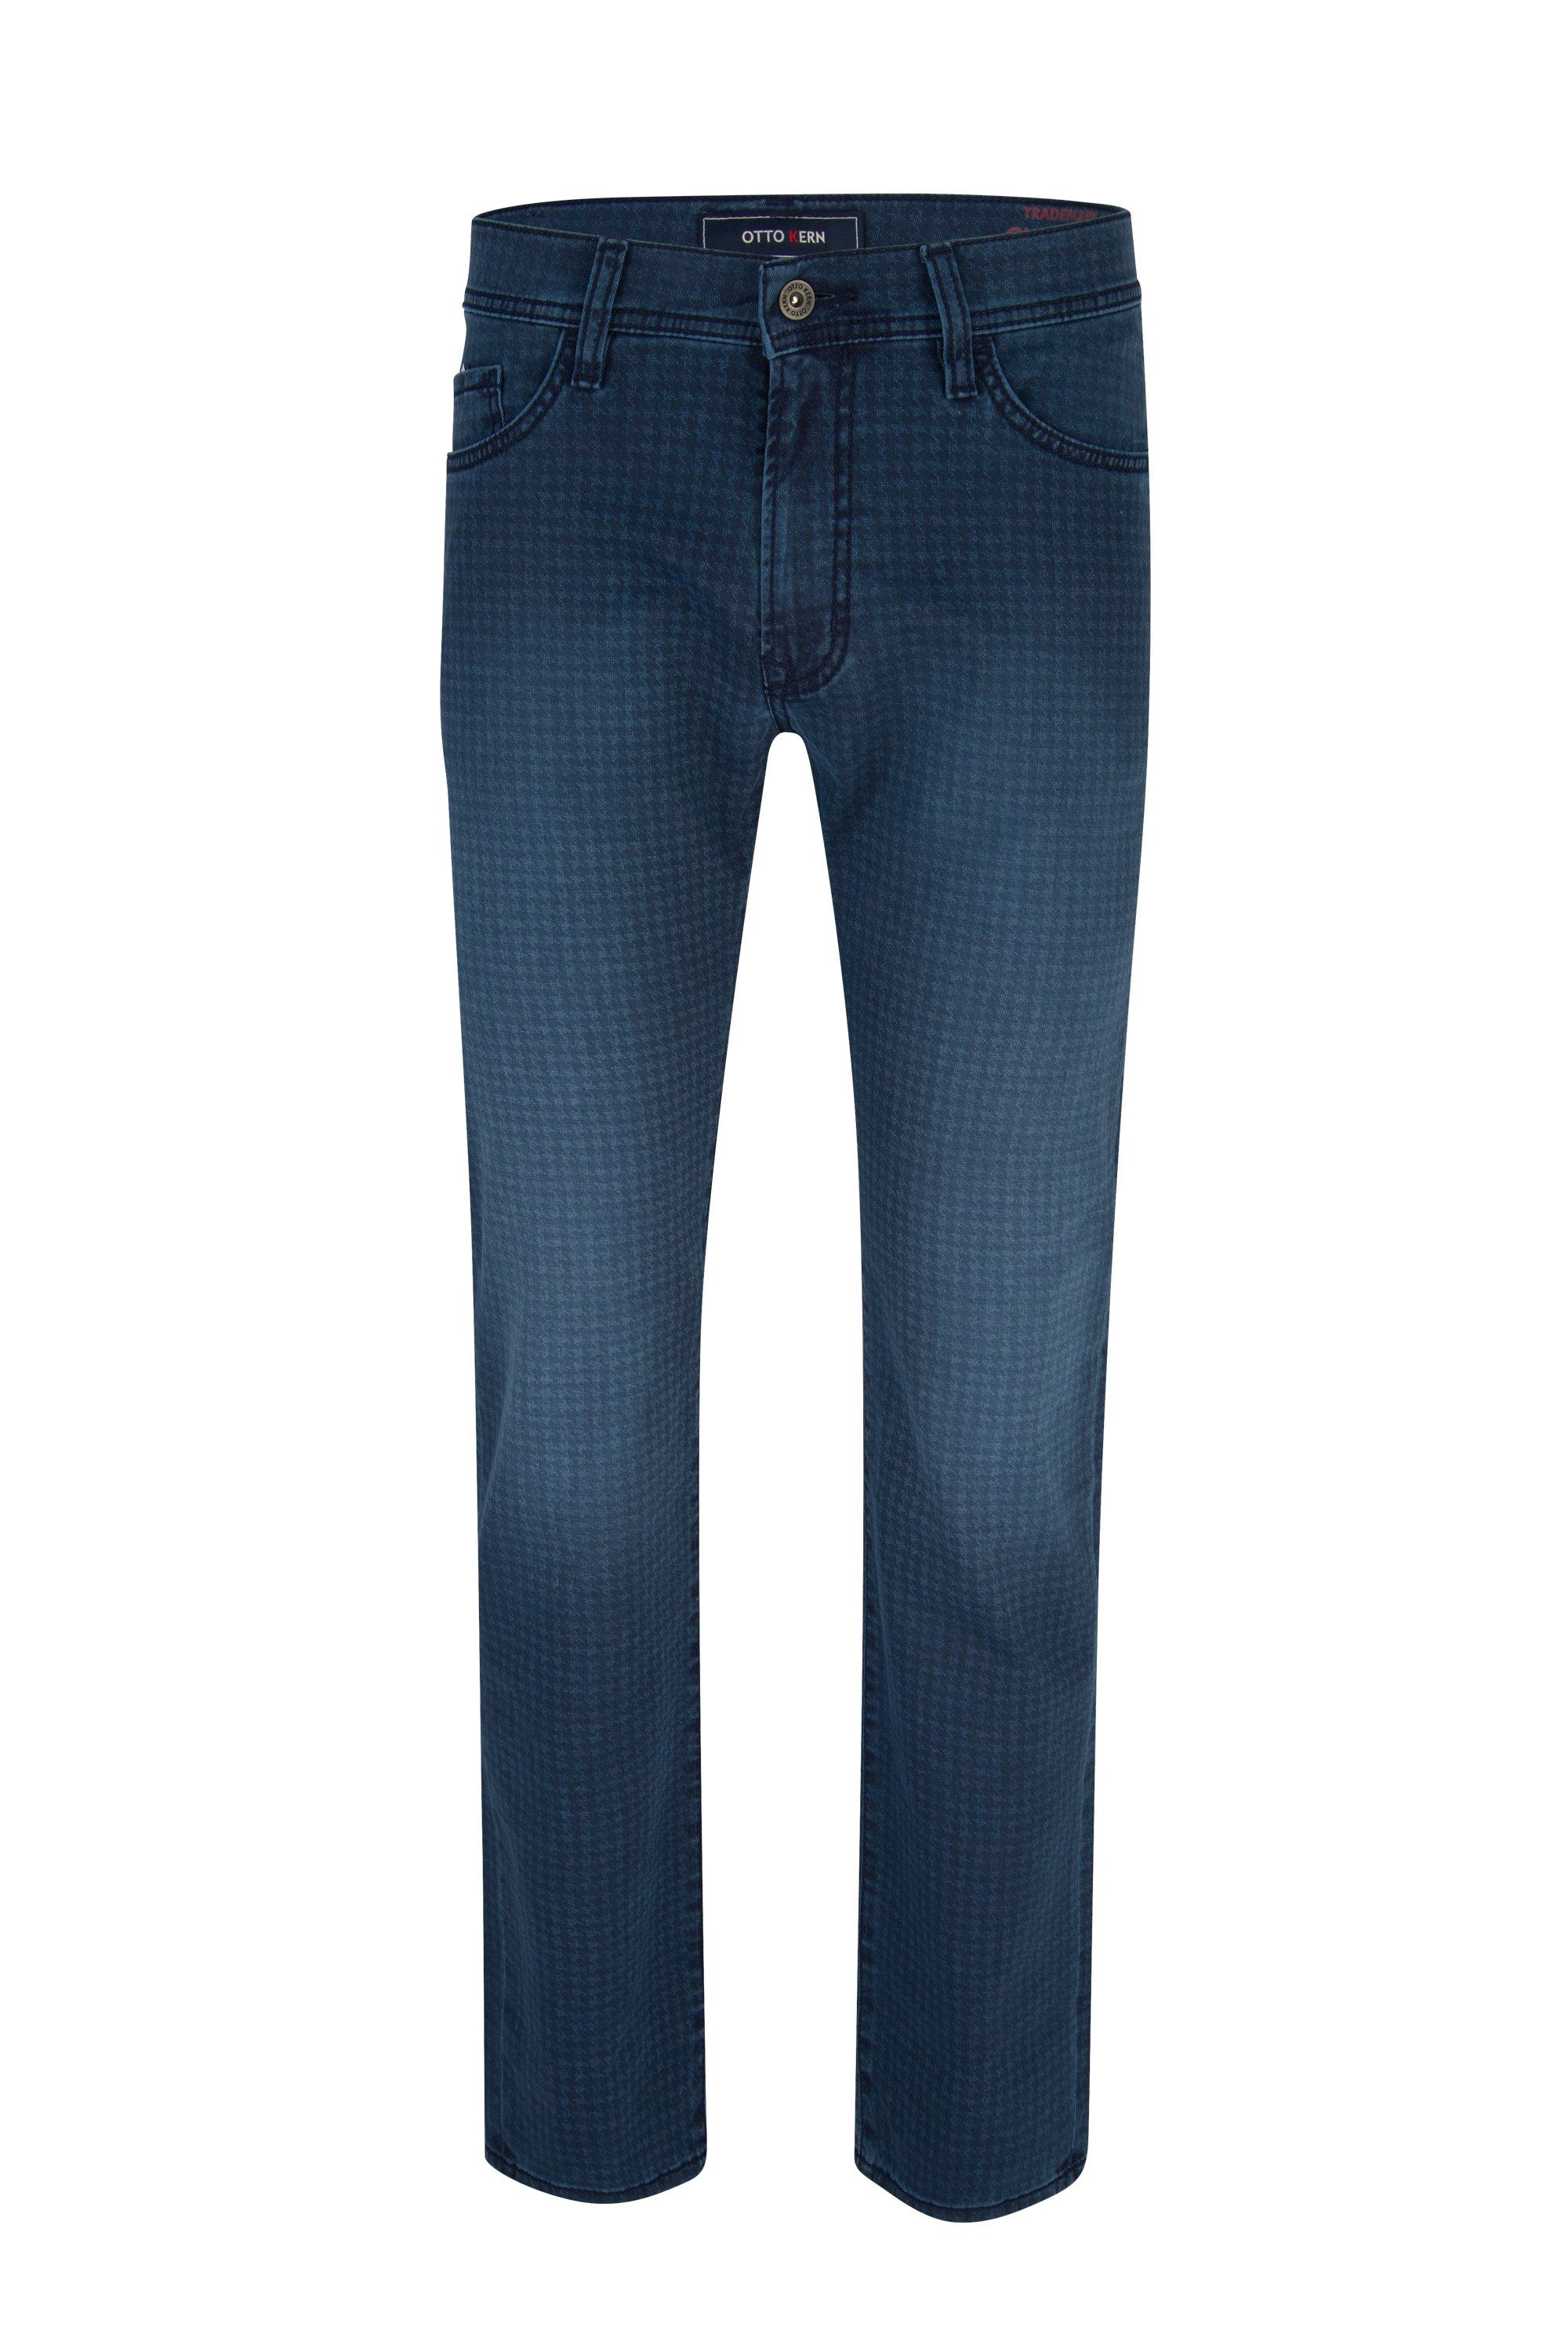 OTTO blue JOHN KERN Kern 5-Pocket-Jeans 6700.6822 patterned used 67042